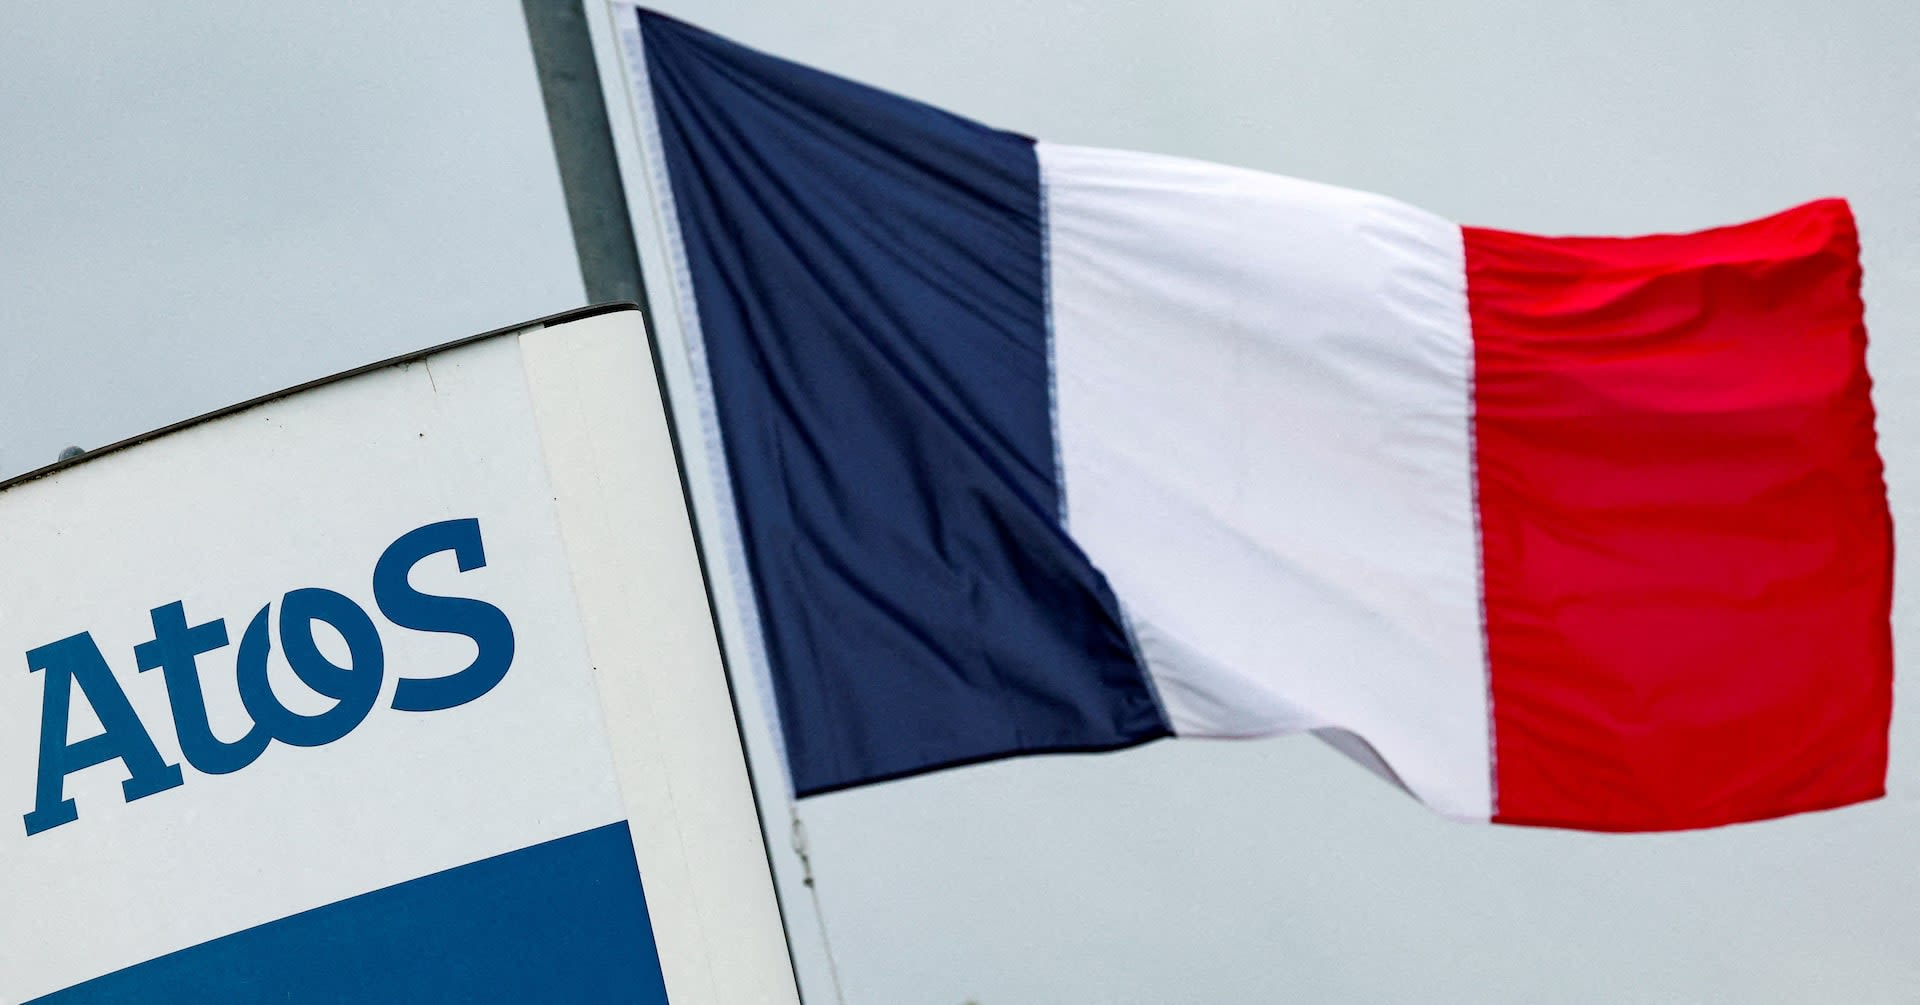 The European Central Bank holds 20% of Atos bonds, La Lettre says